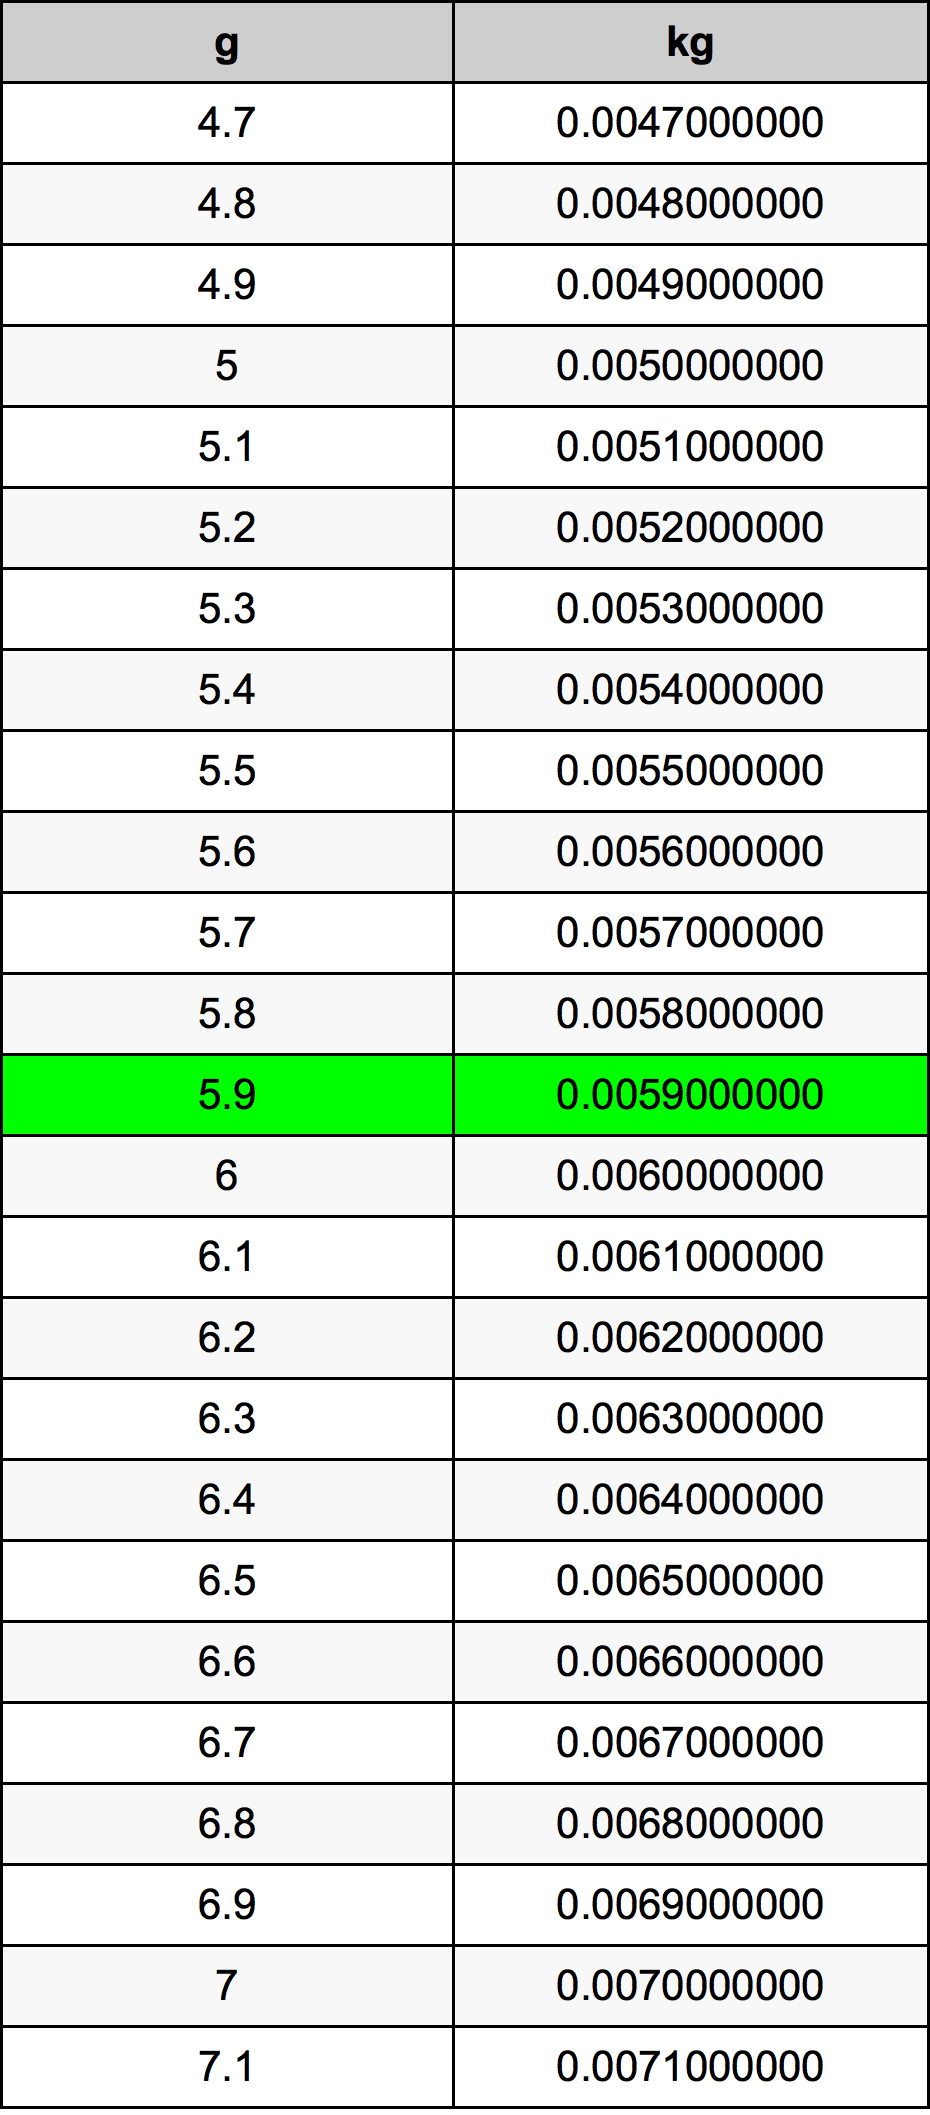 5.9 غرام جدول تحويل